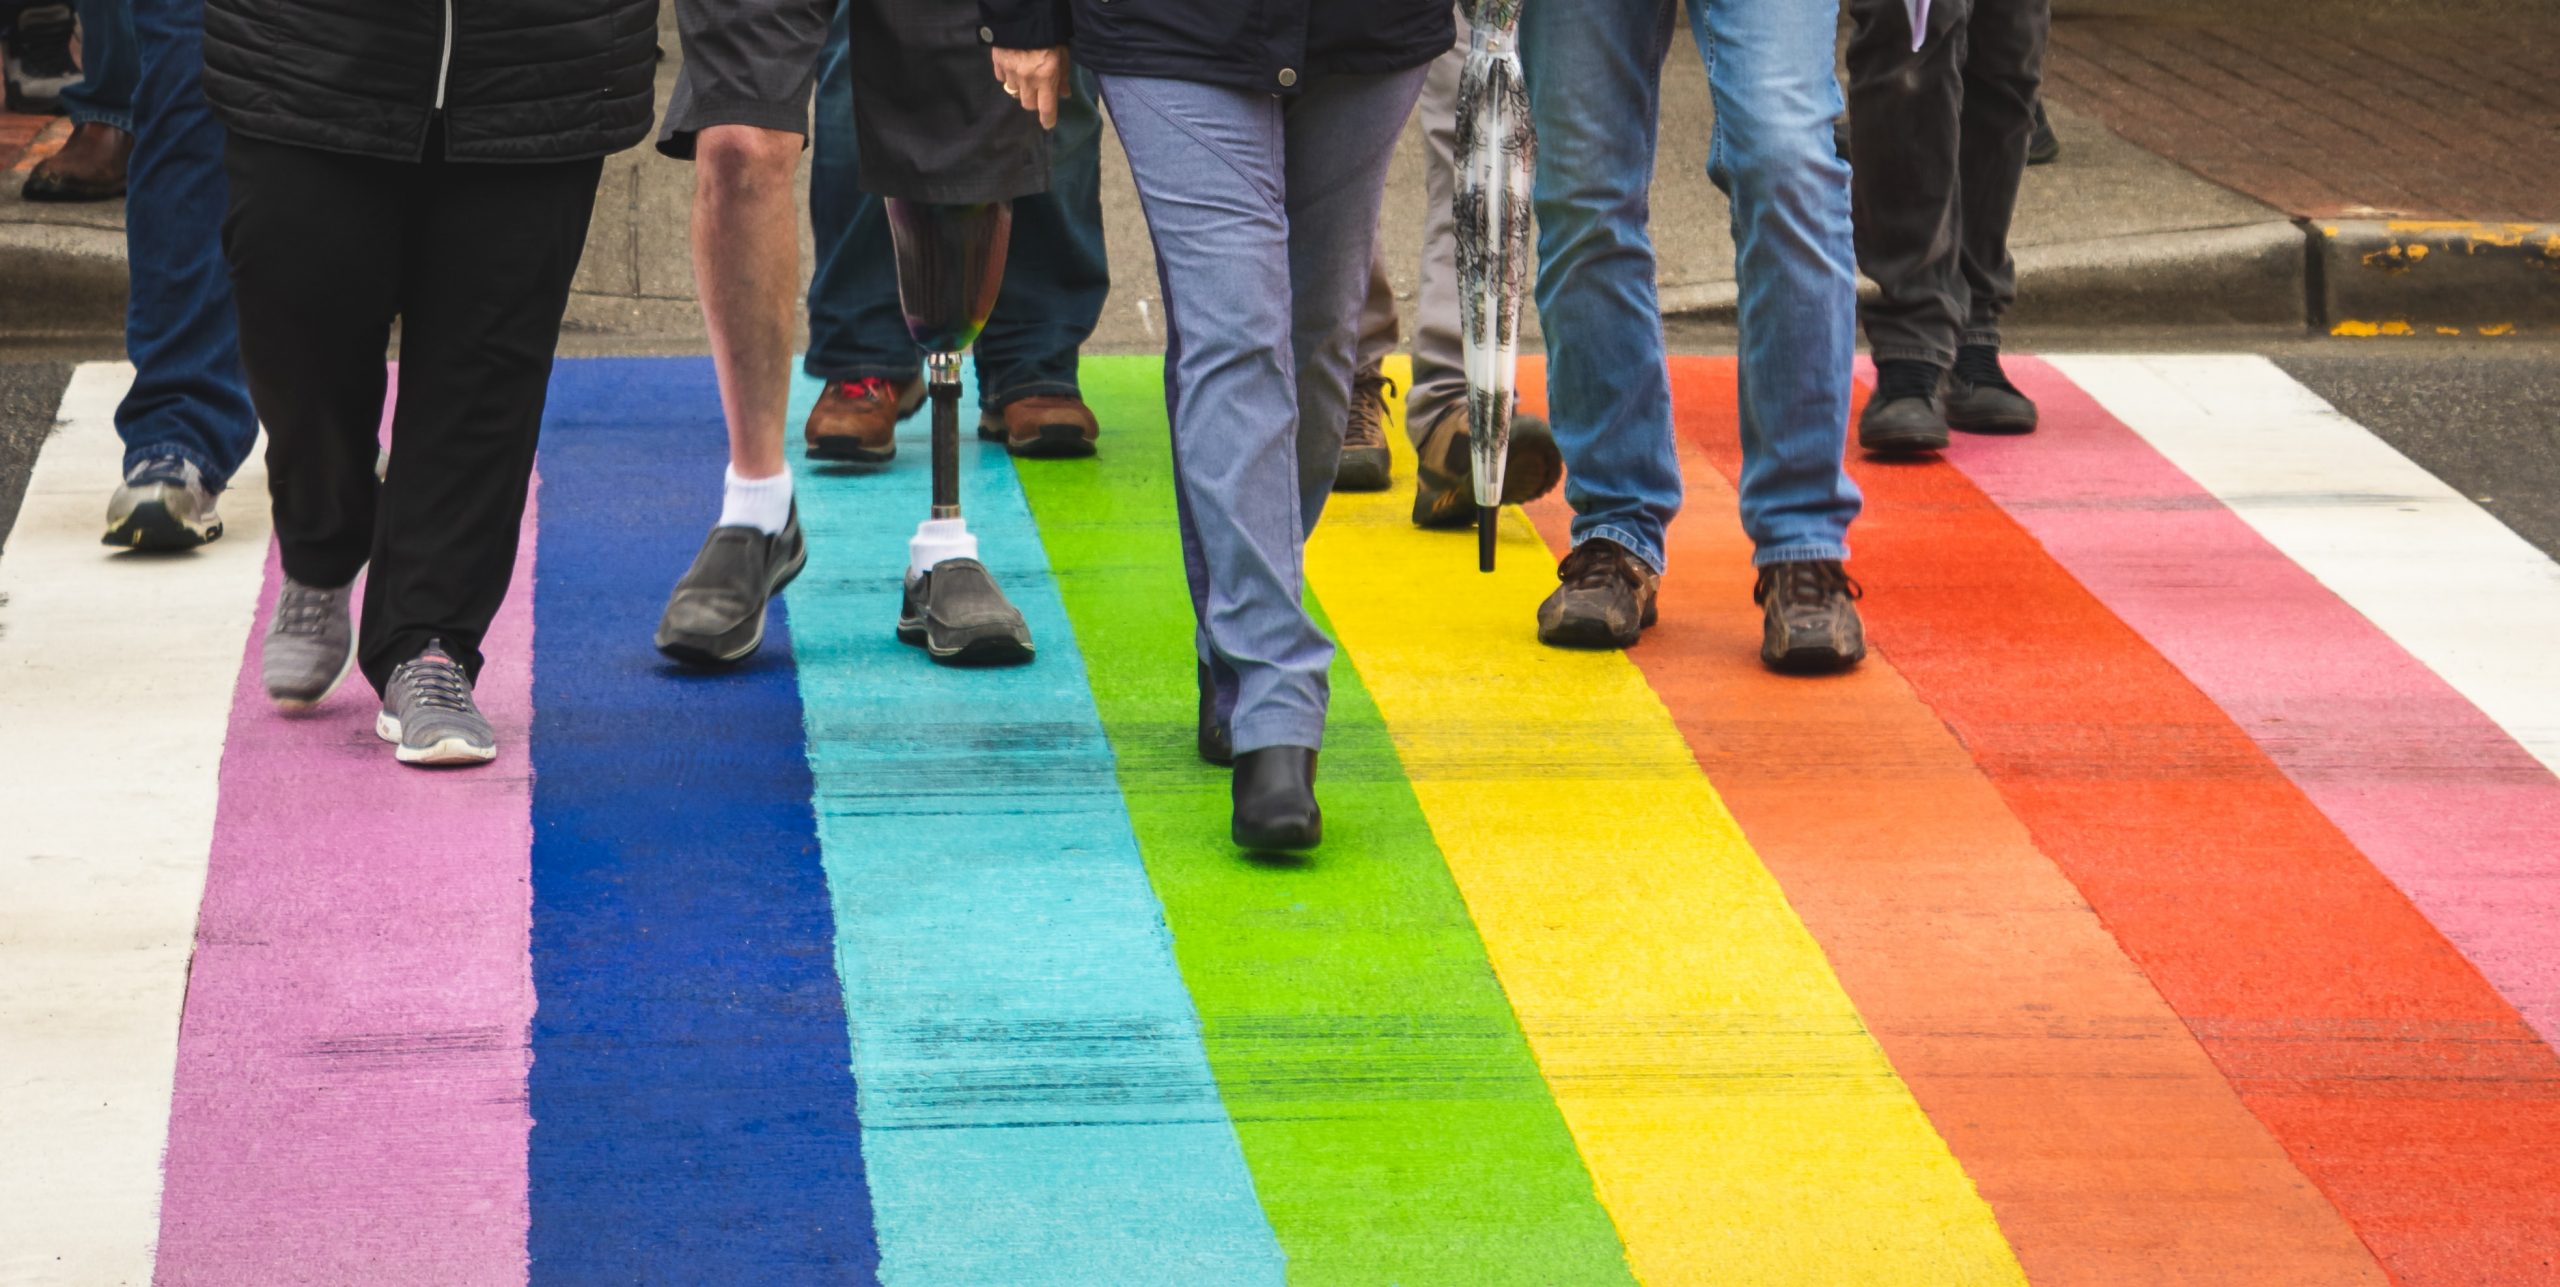 Rainbow crosswalk with people walking